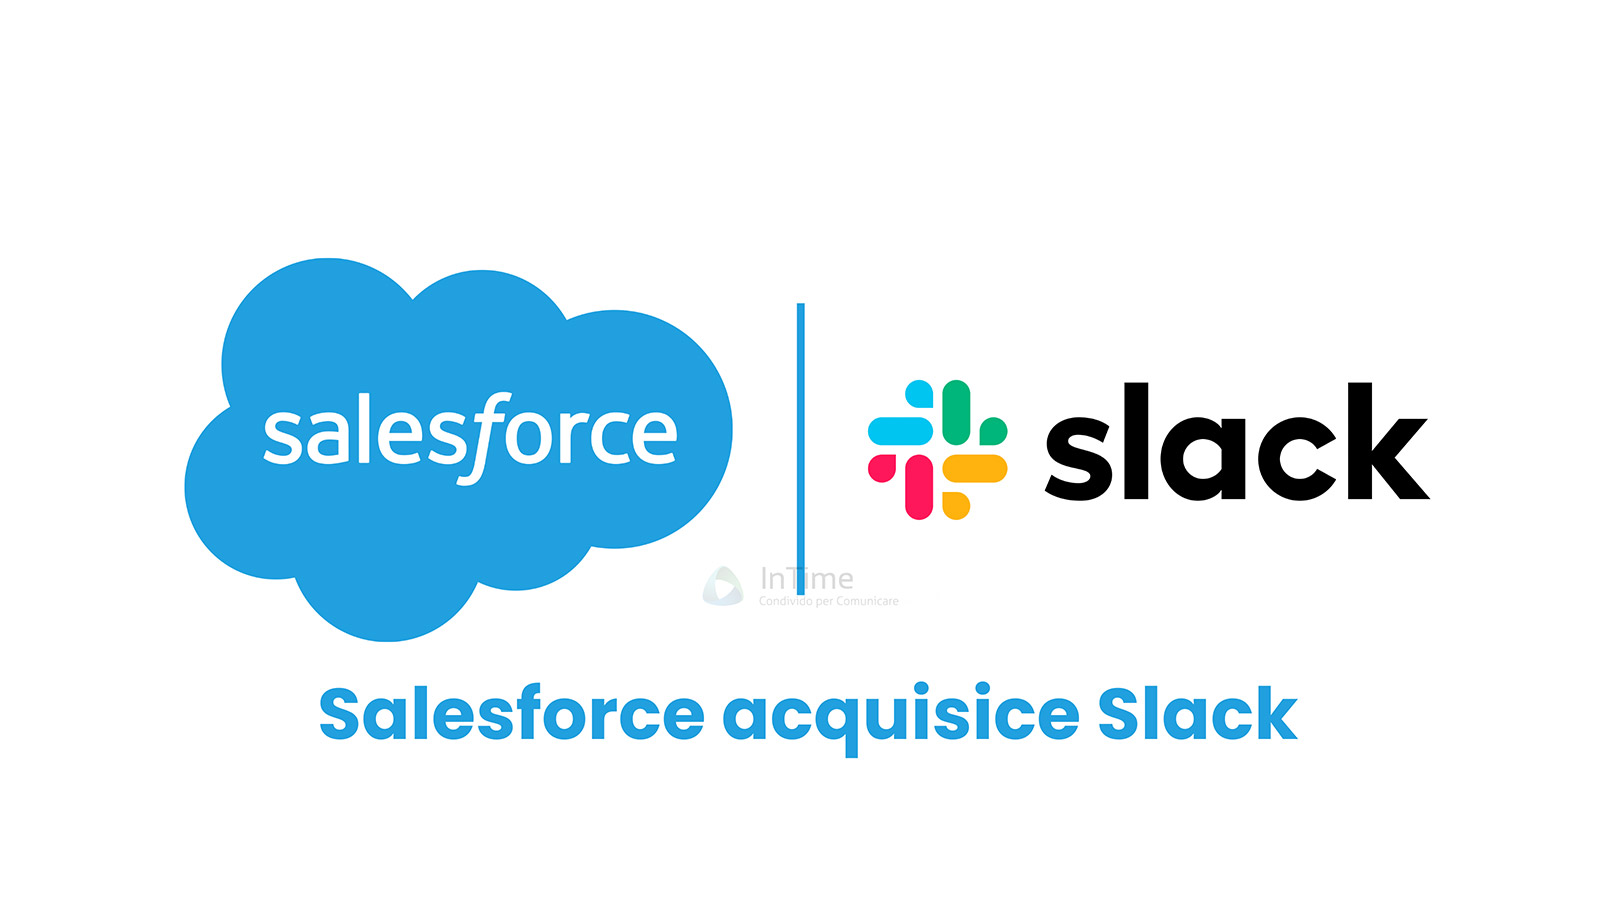 slack owned by salesforce